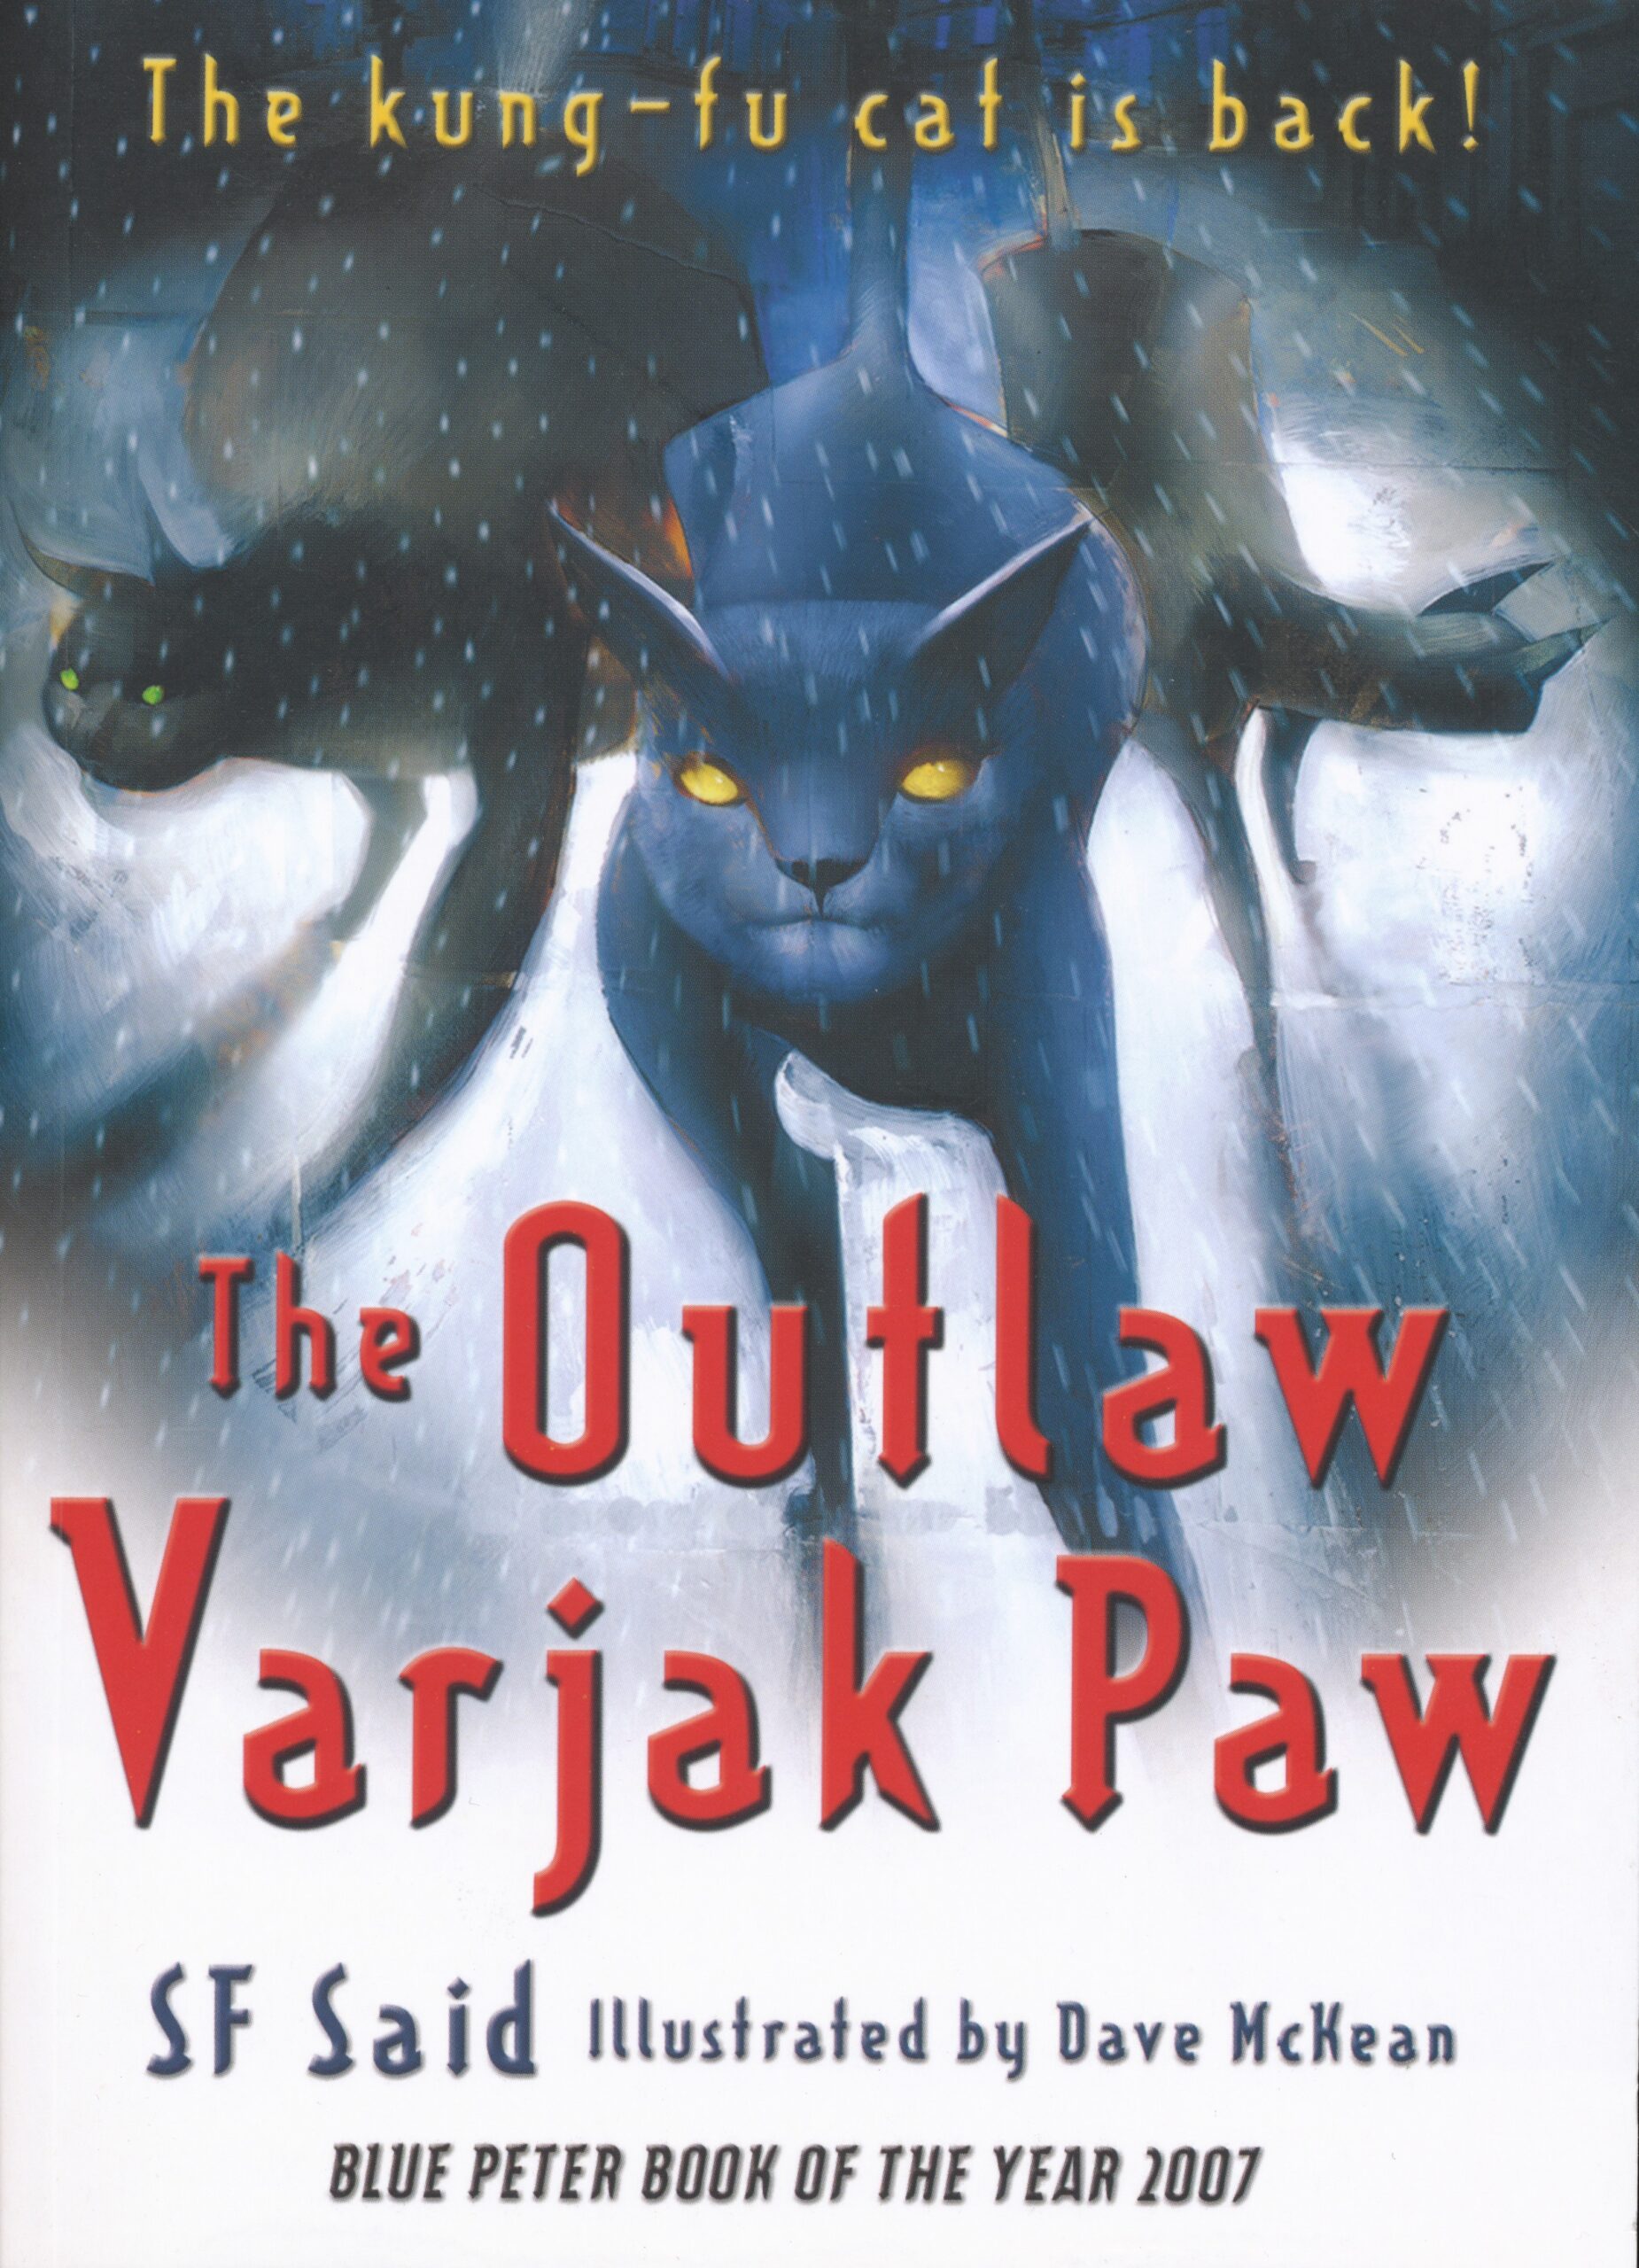 Outlaw Varjak Paw